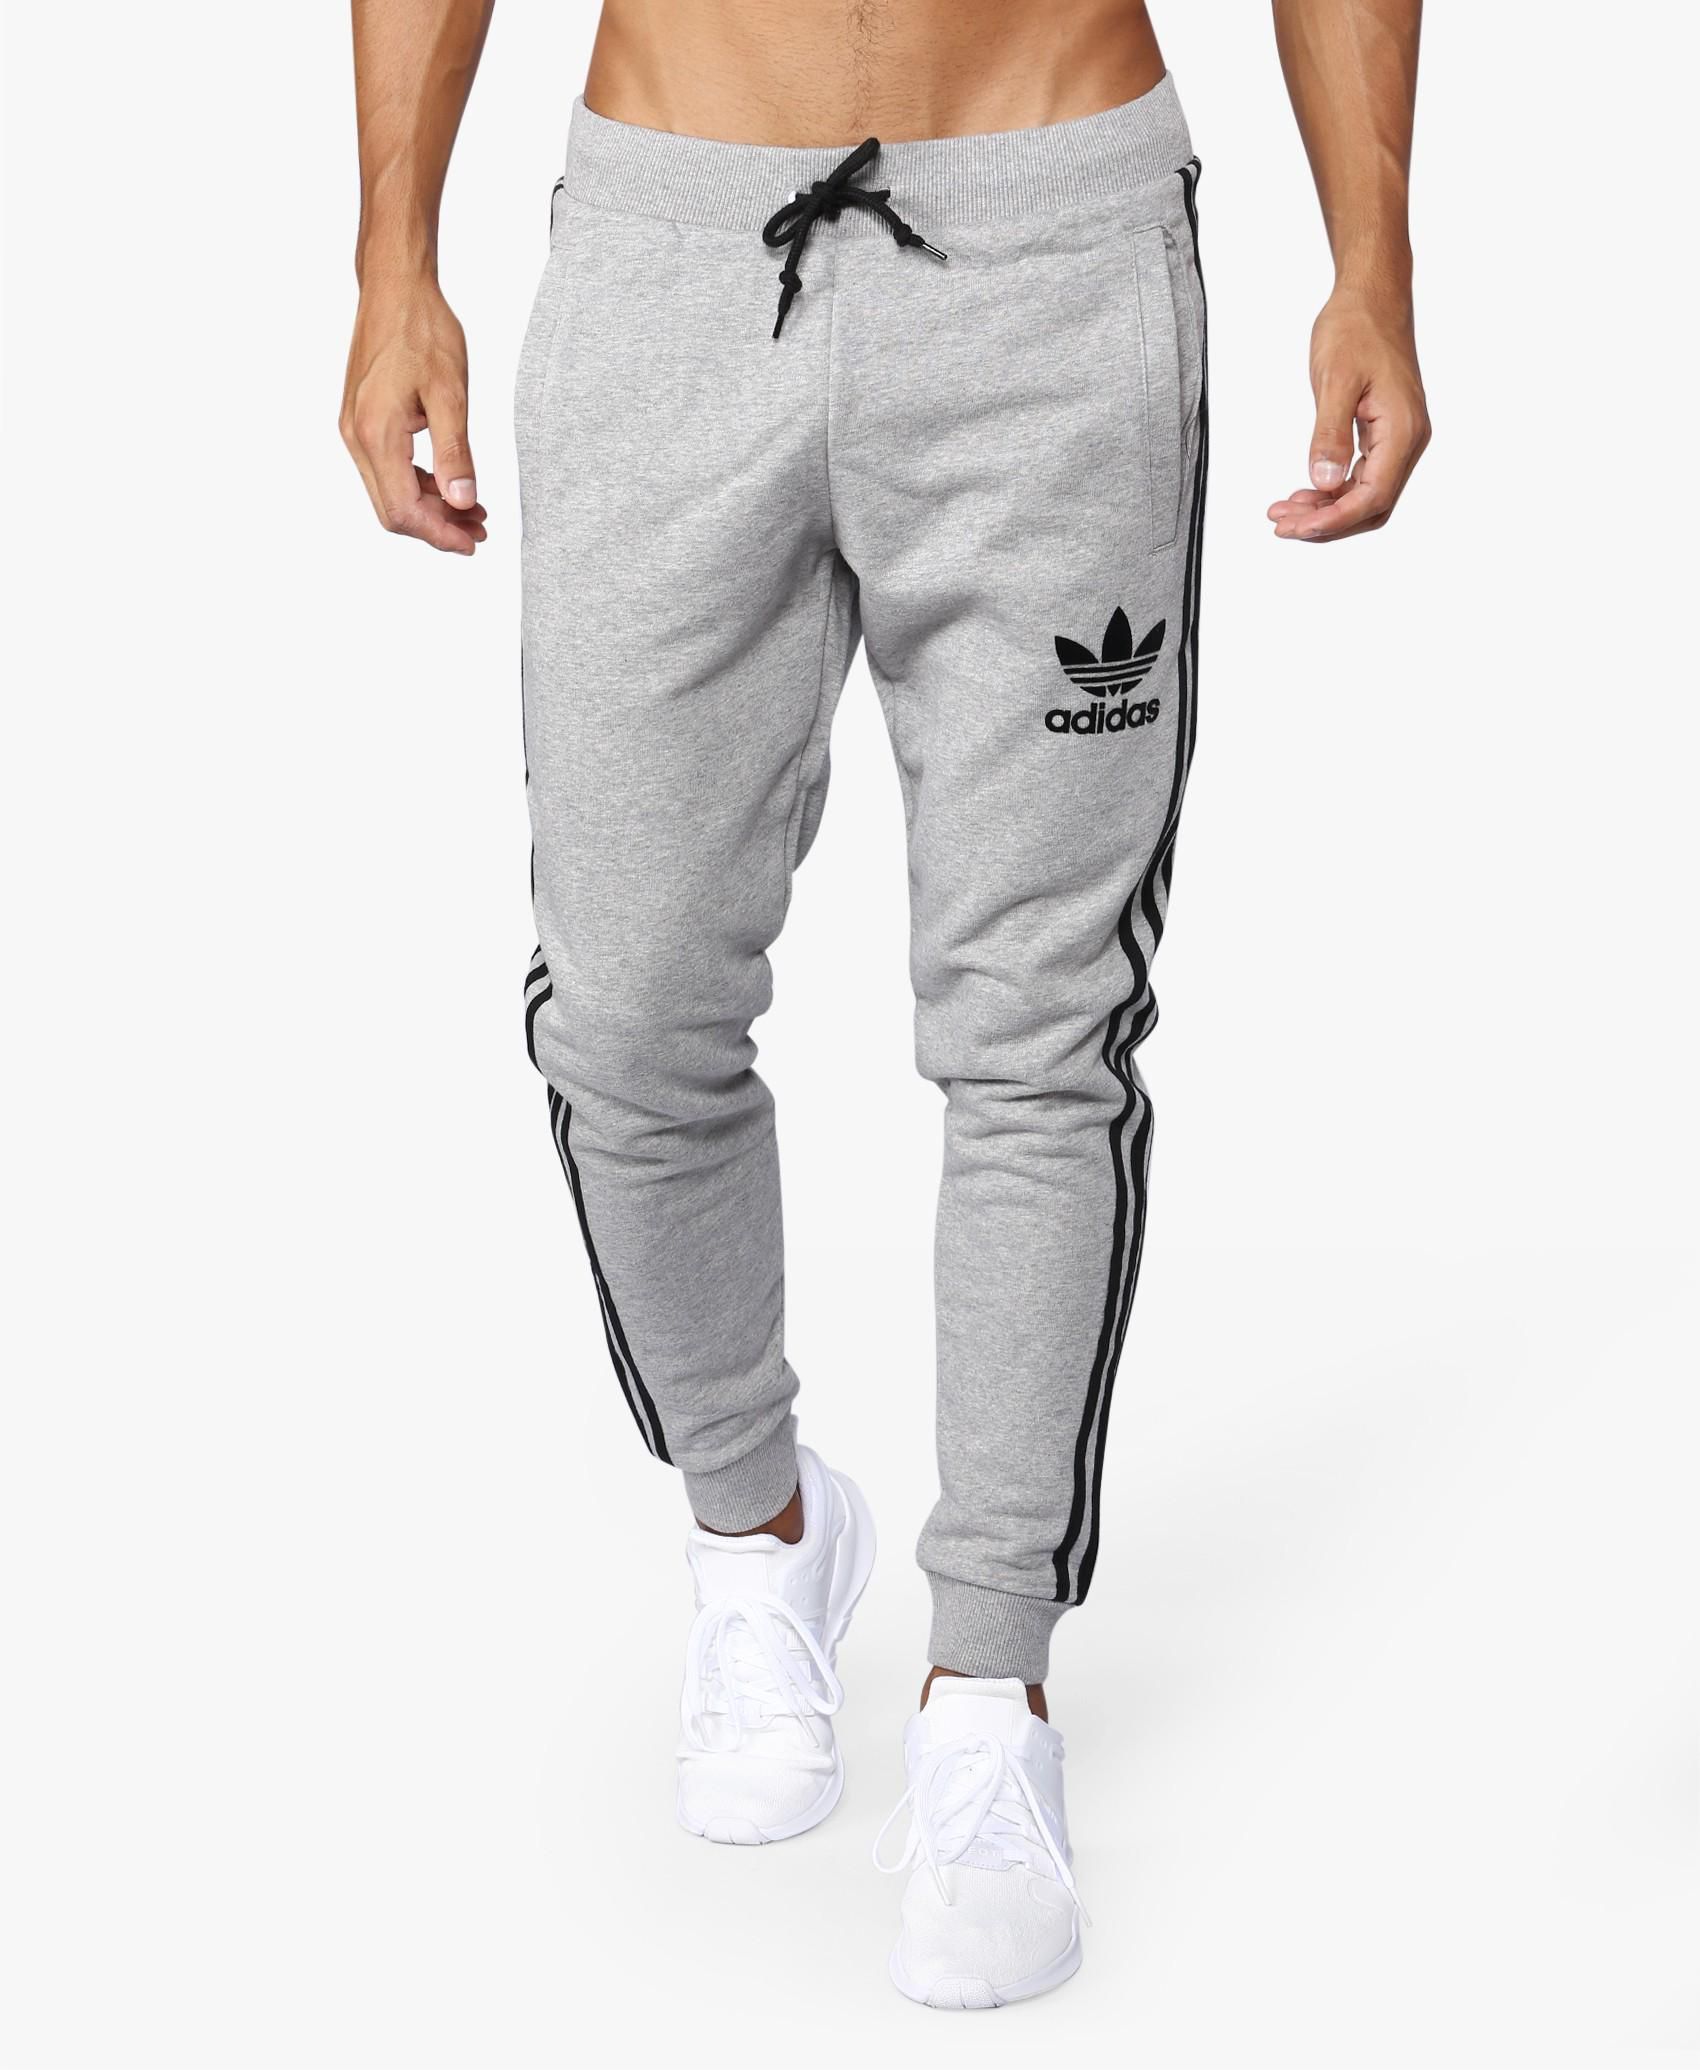 Grey 3 Stripe Sweatpants.